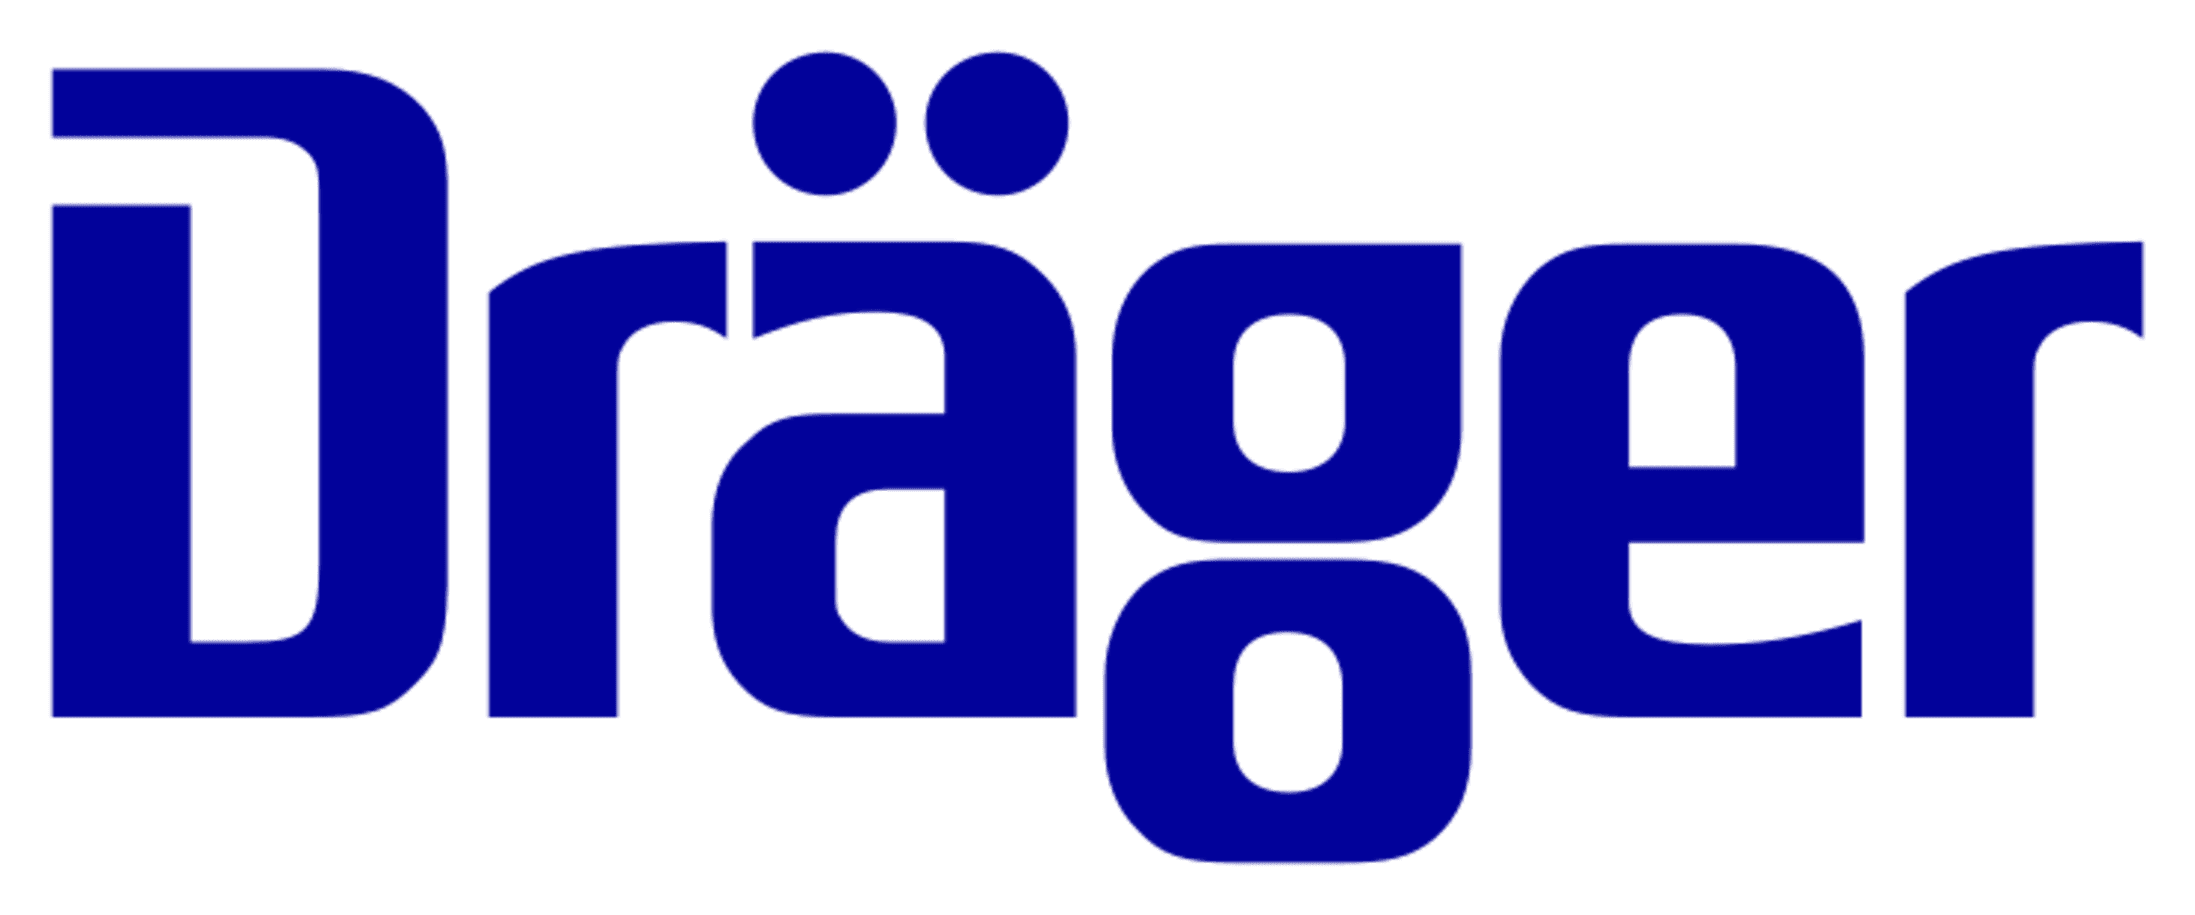 Draeger logo Dräger logo